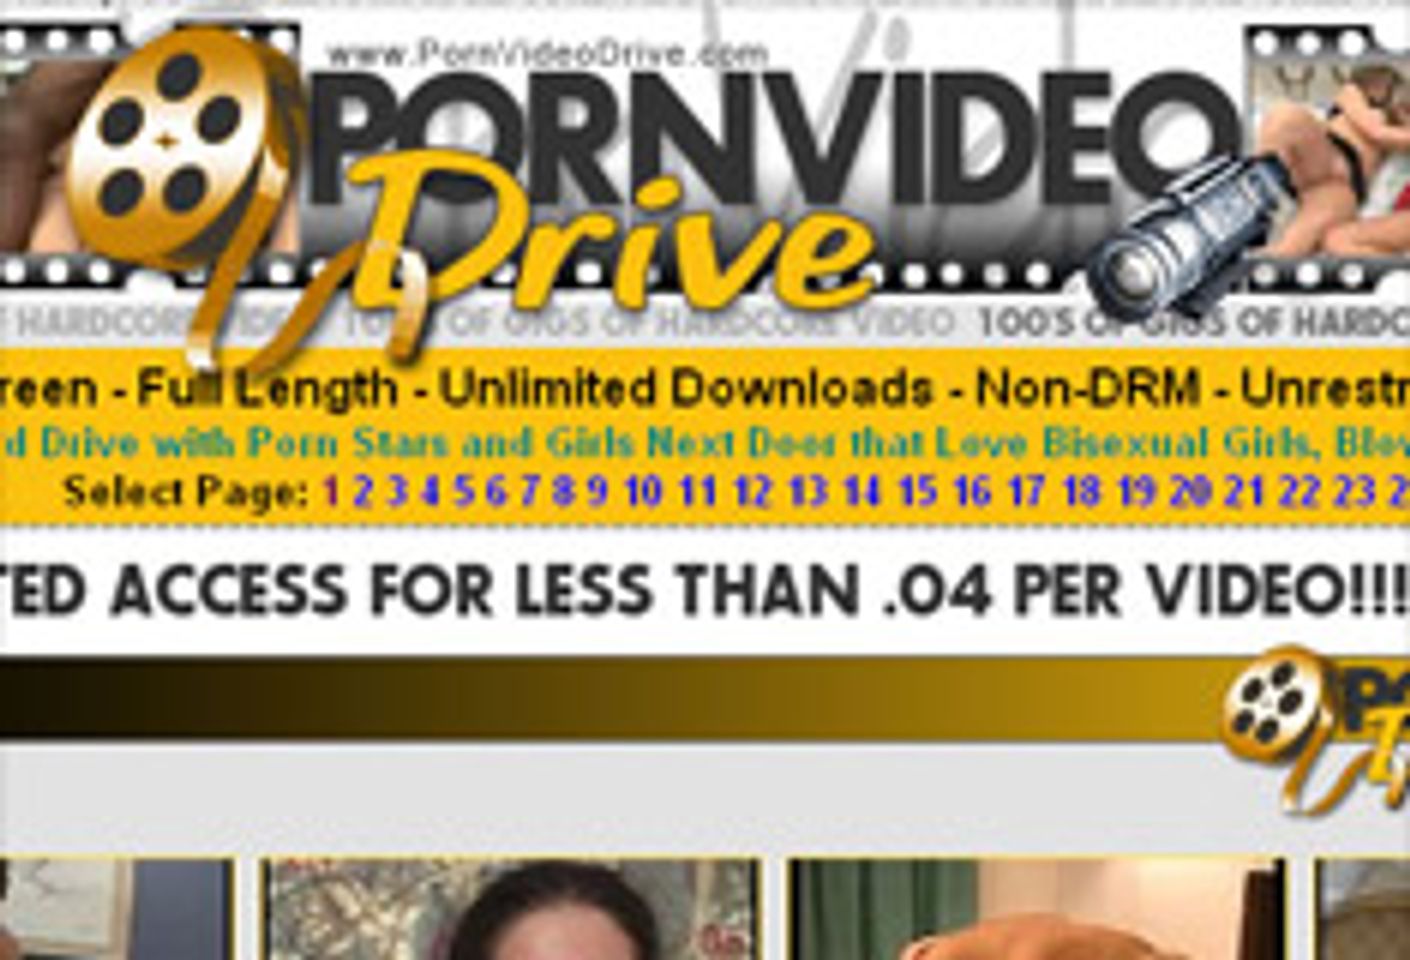 PornVideoDrive.com: Feeding the Horny Masses